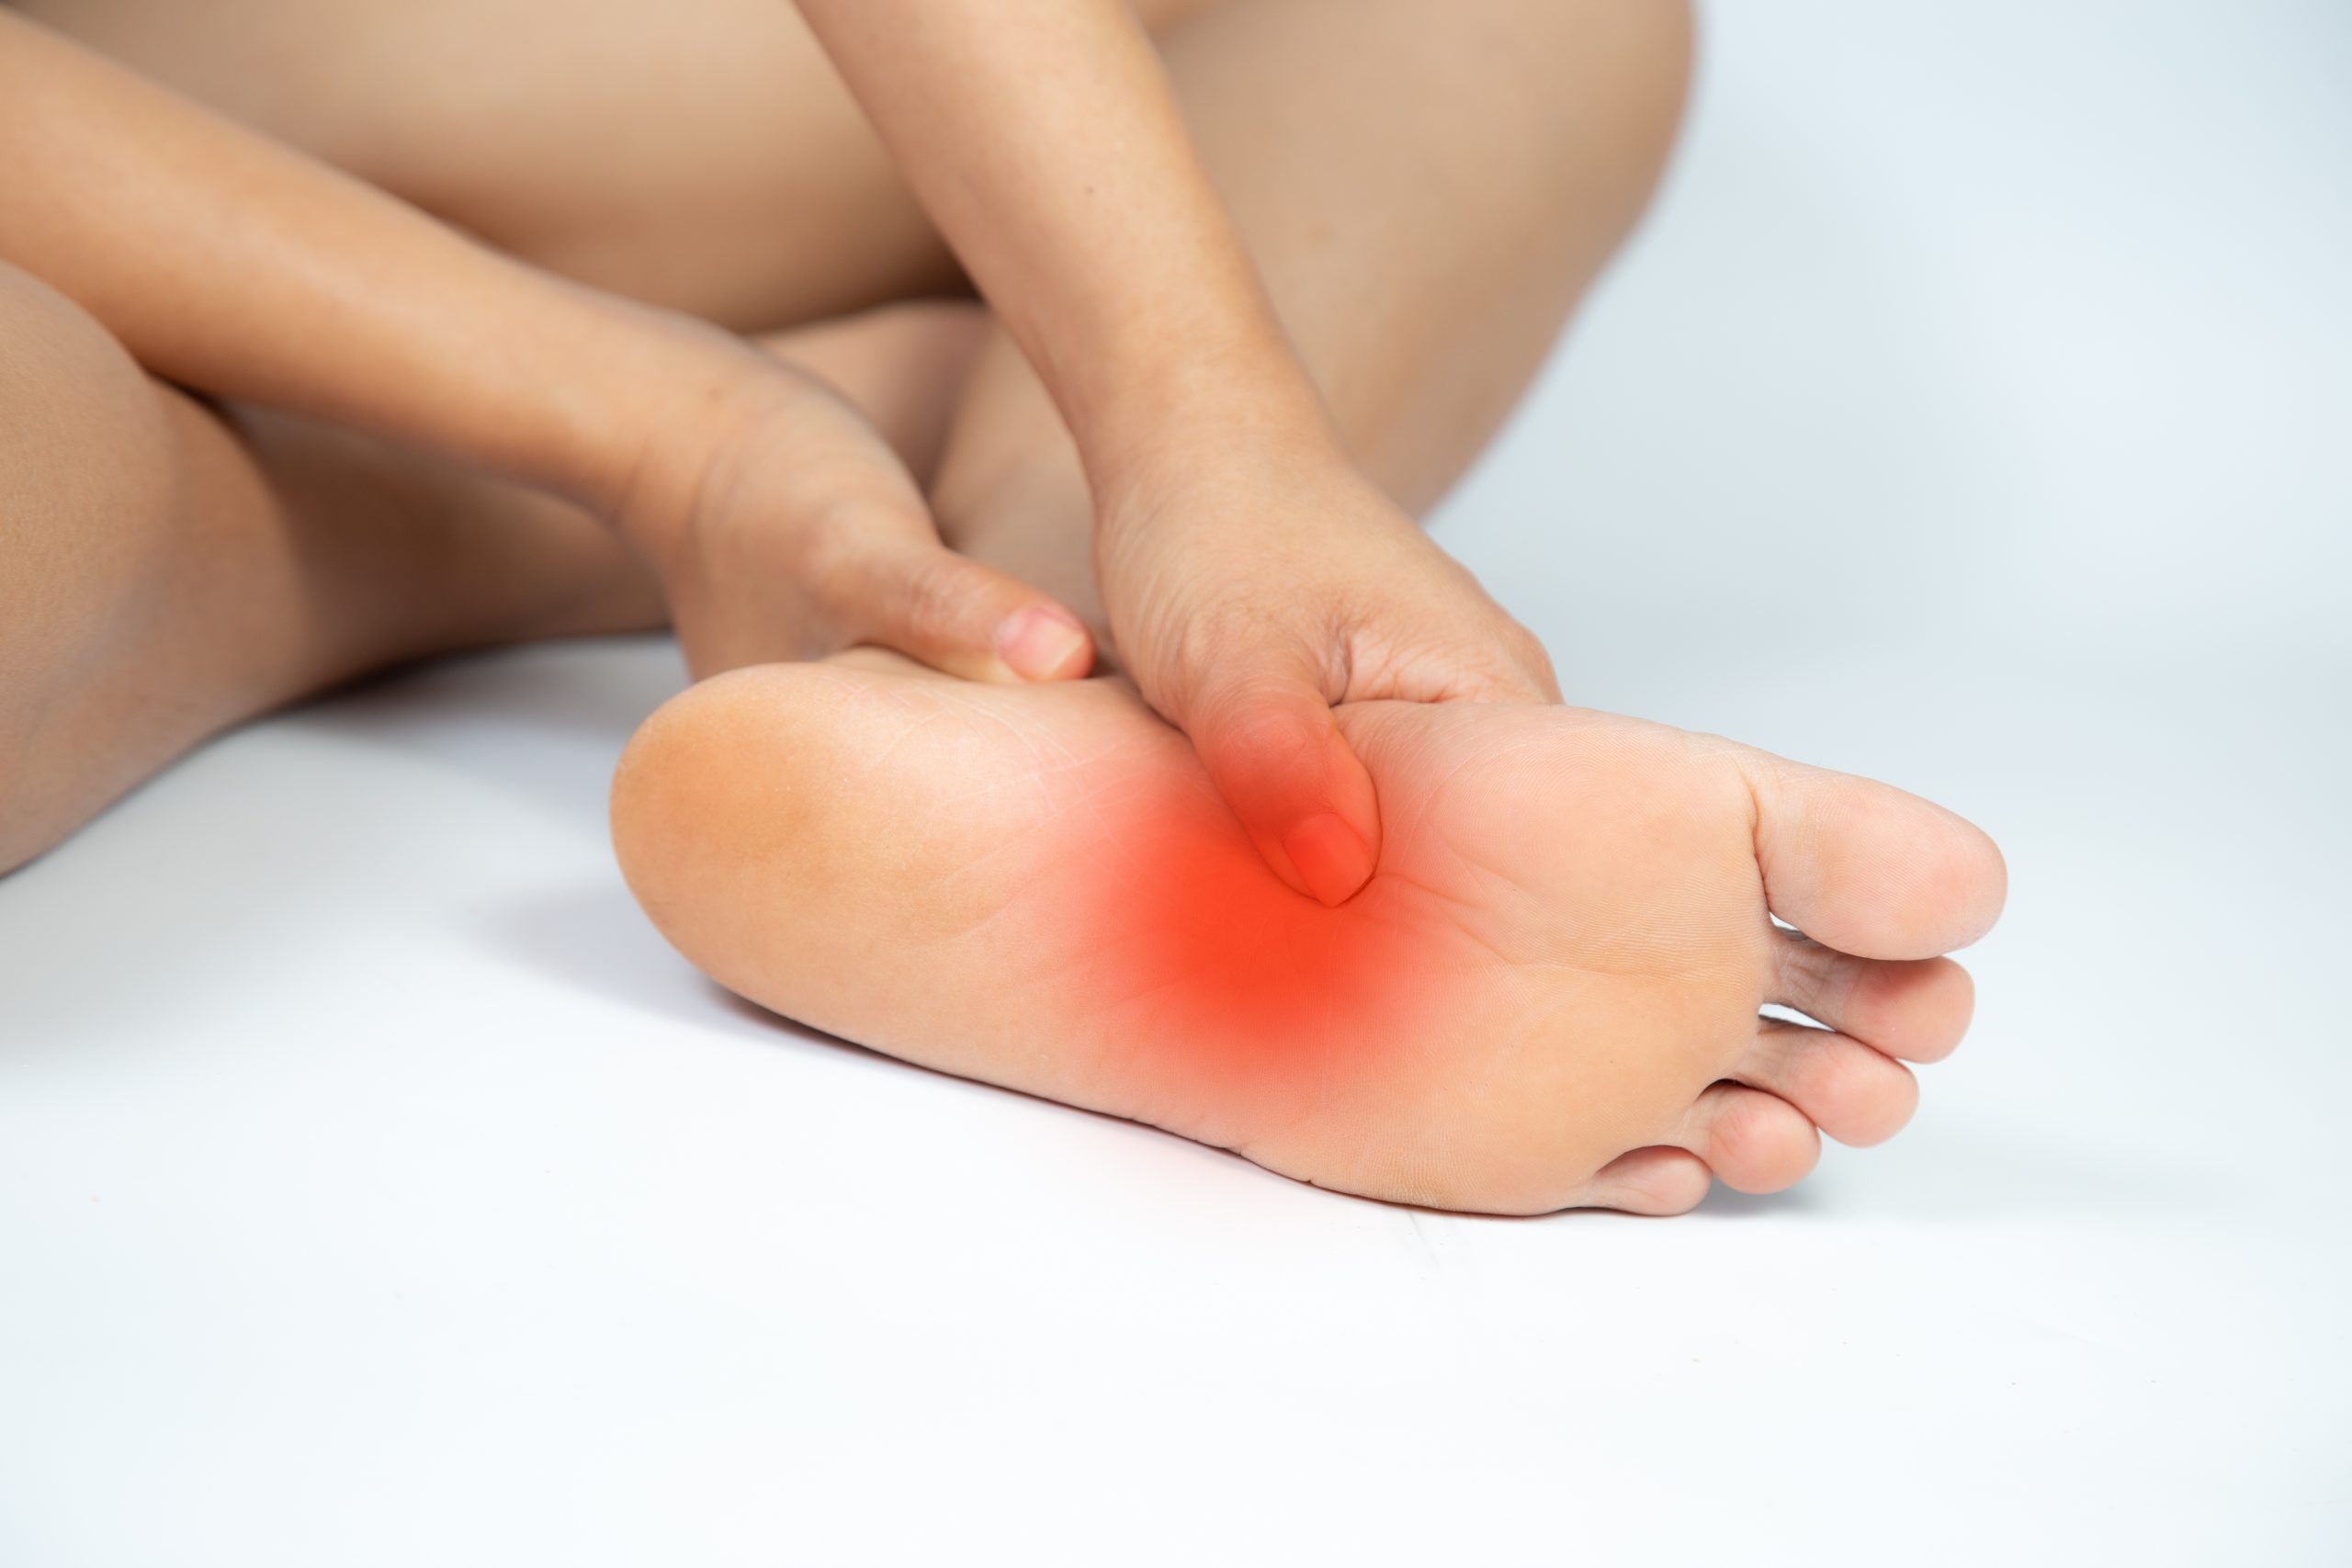 Pain under the foot: plantar fasciitis or heel spur?